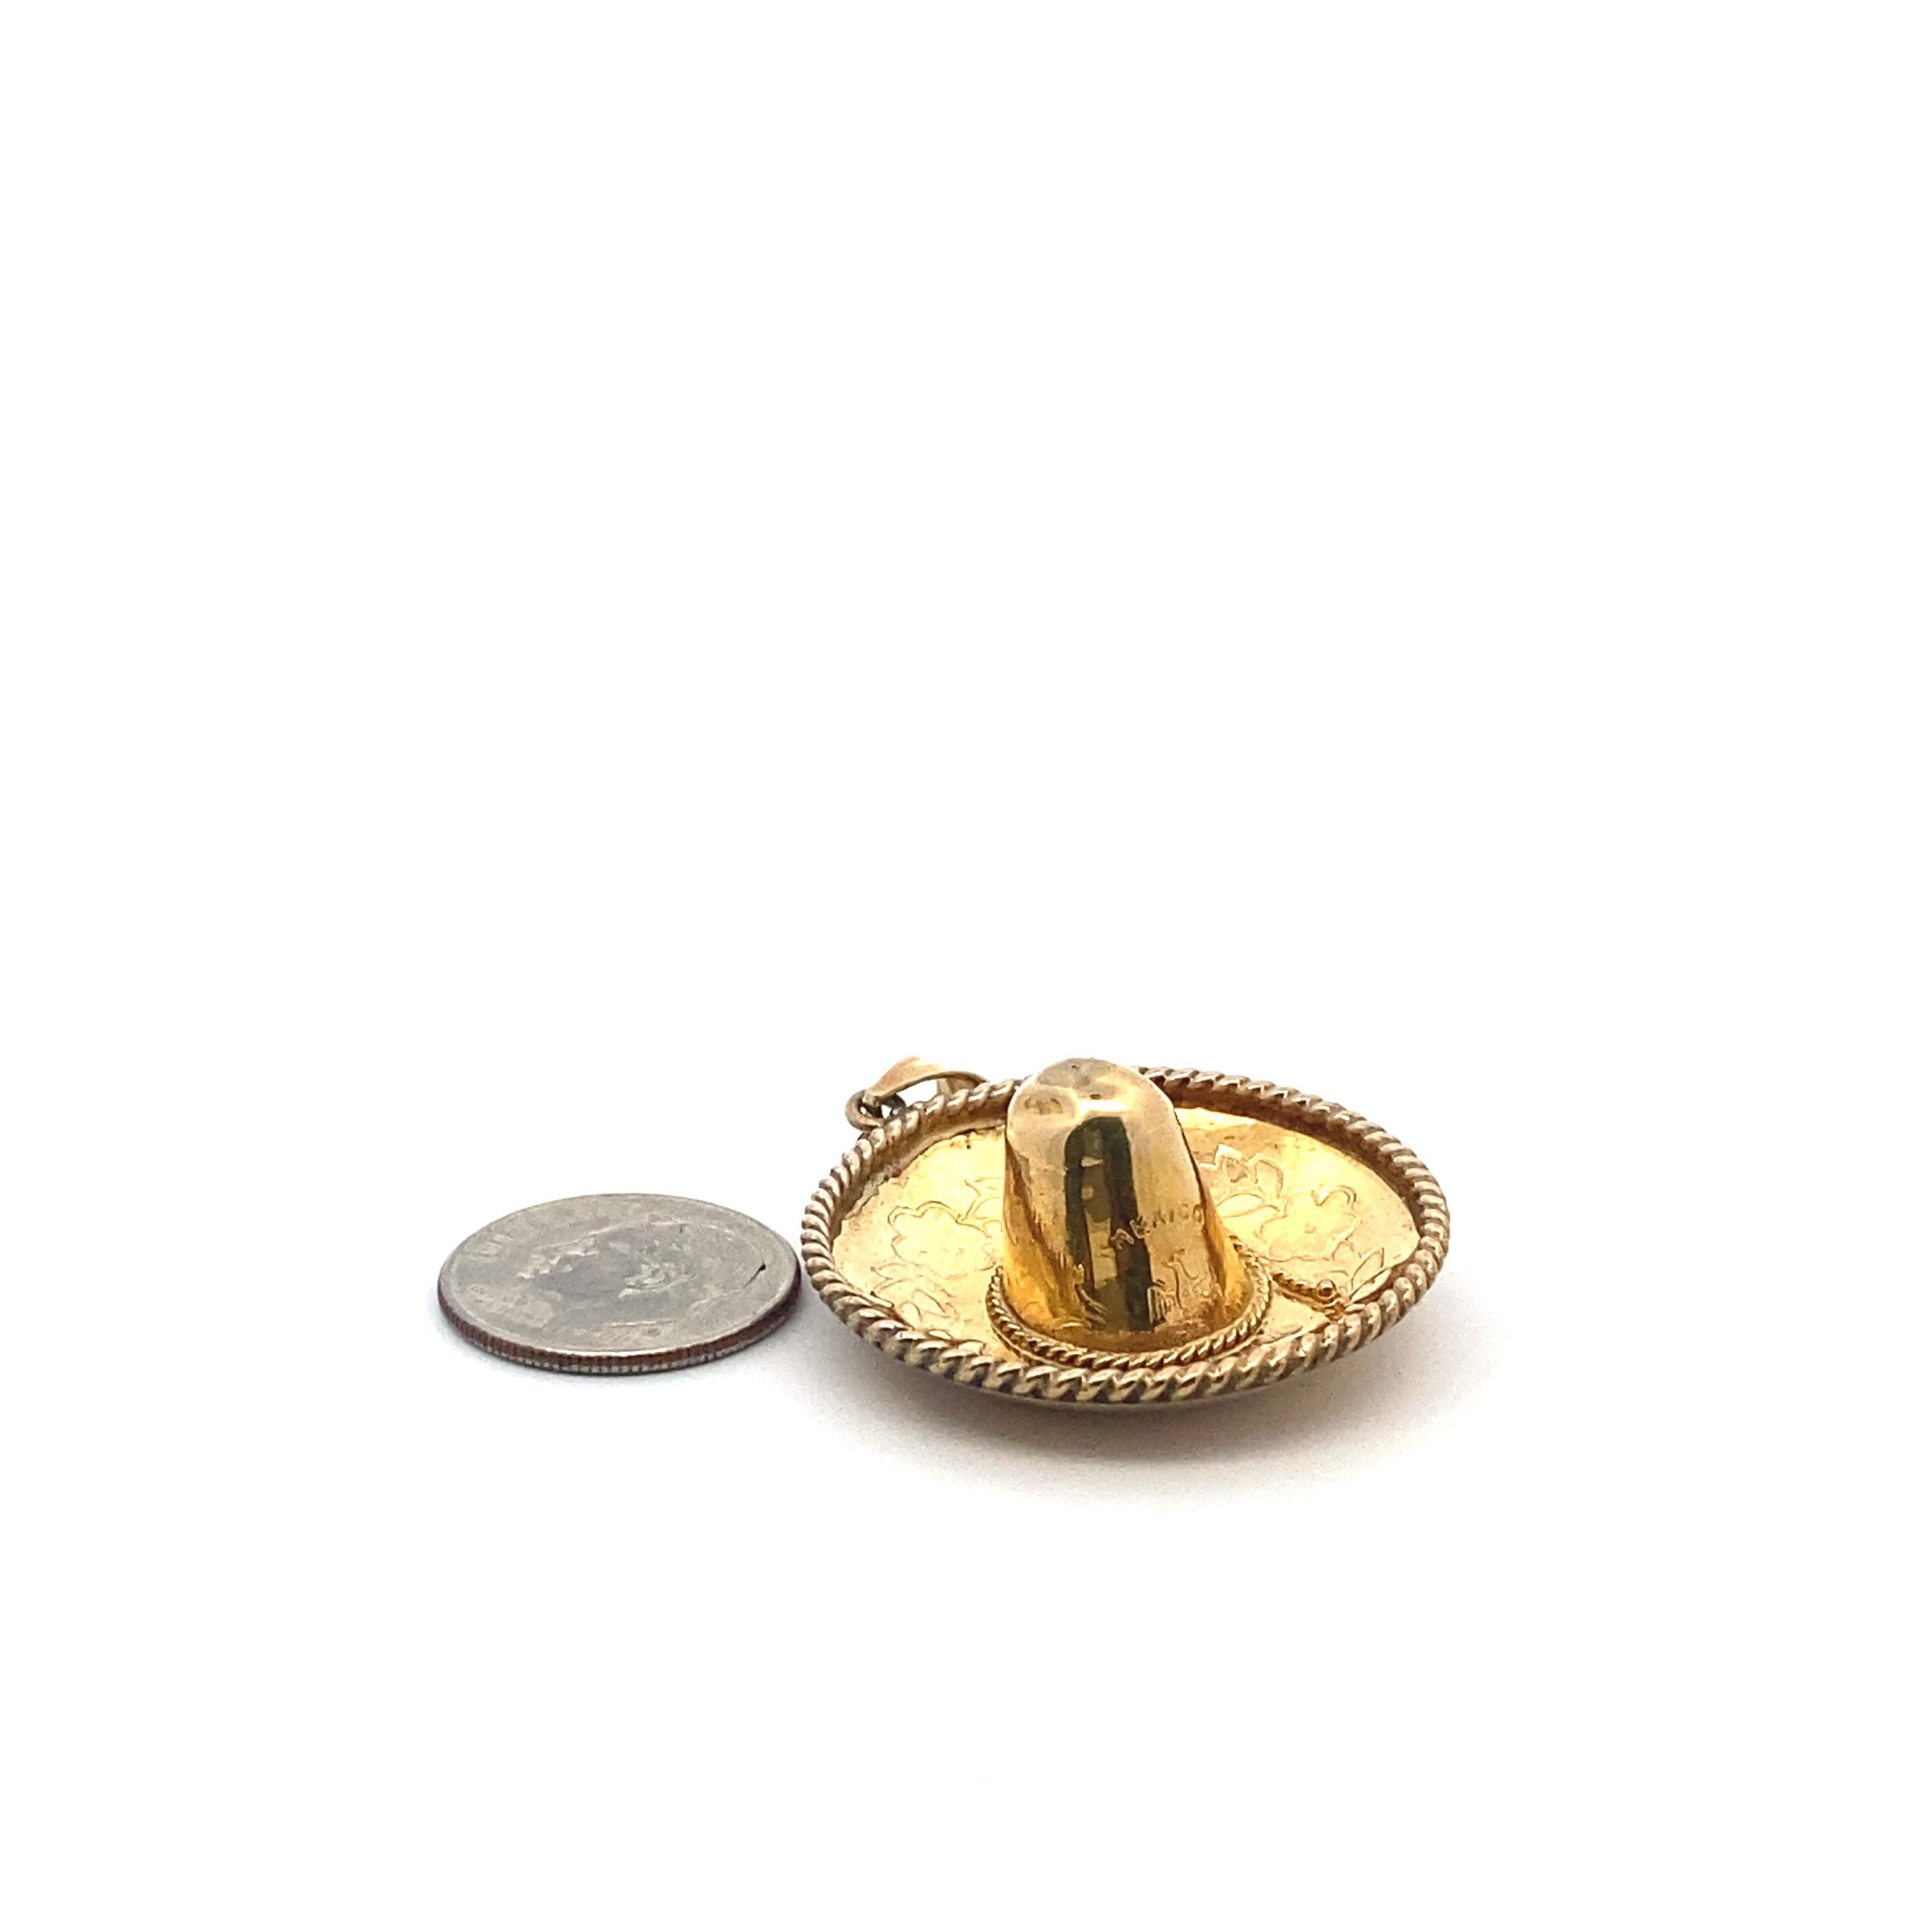 Vintage 14k yellow gold Mexican Sombrero pendant charm, 3.5Dwt 1.25 inch diameter.